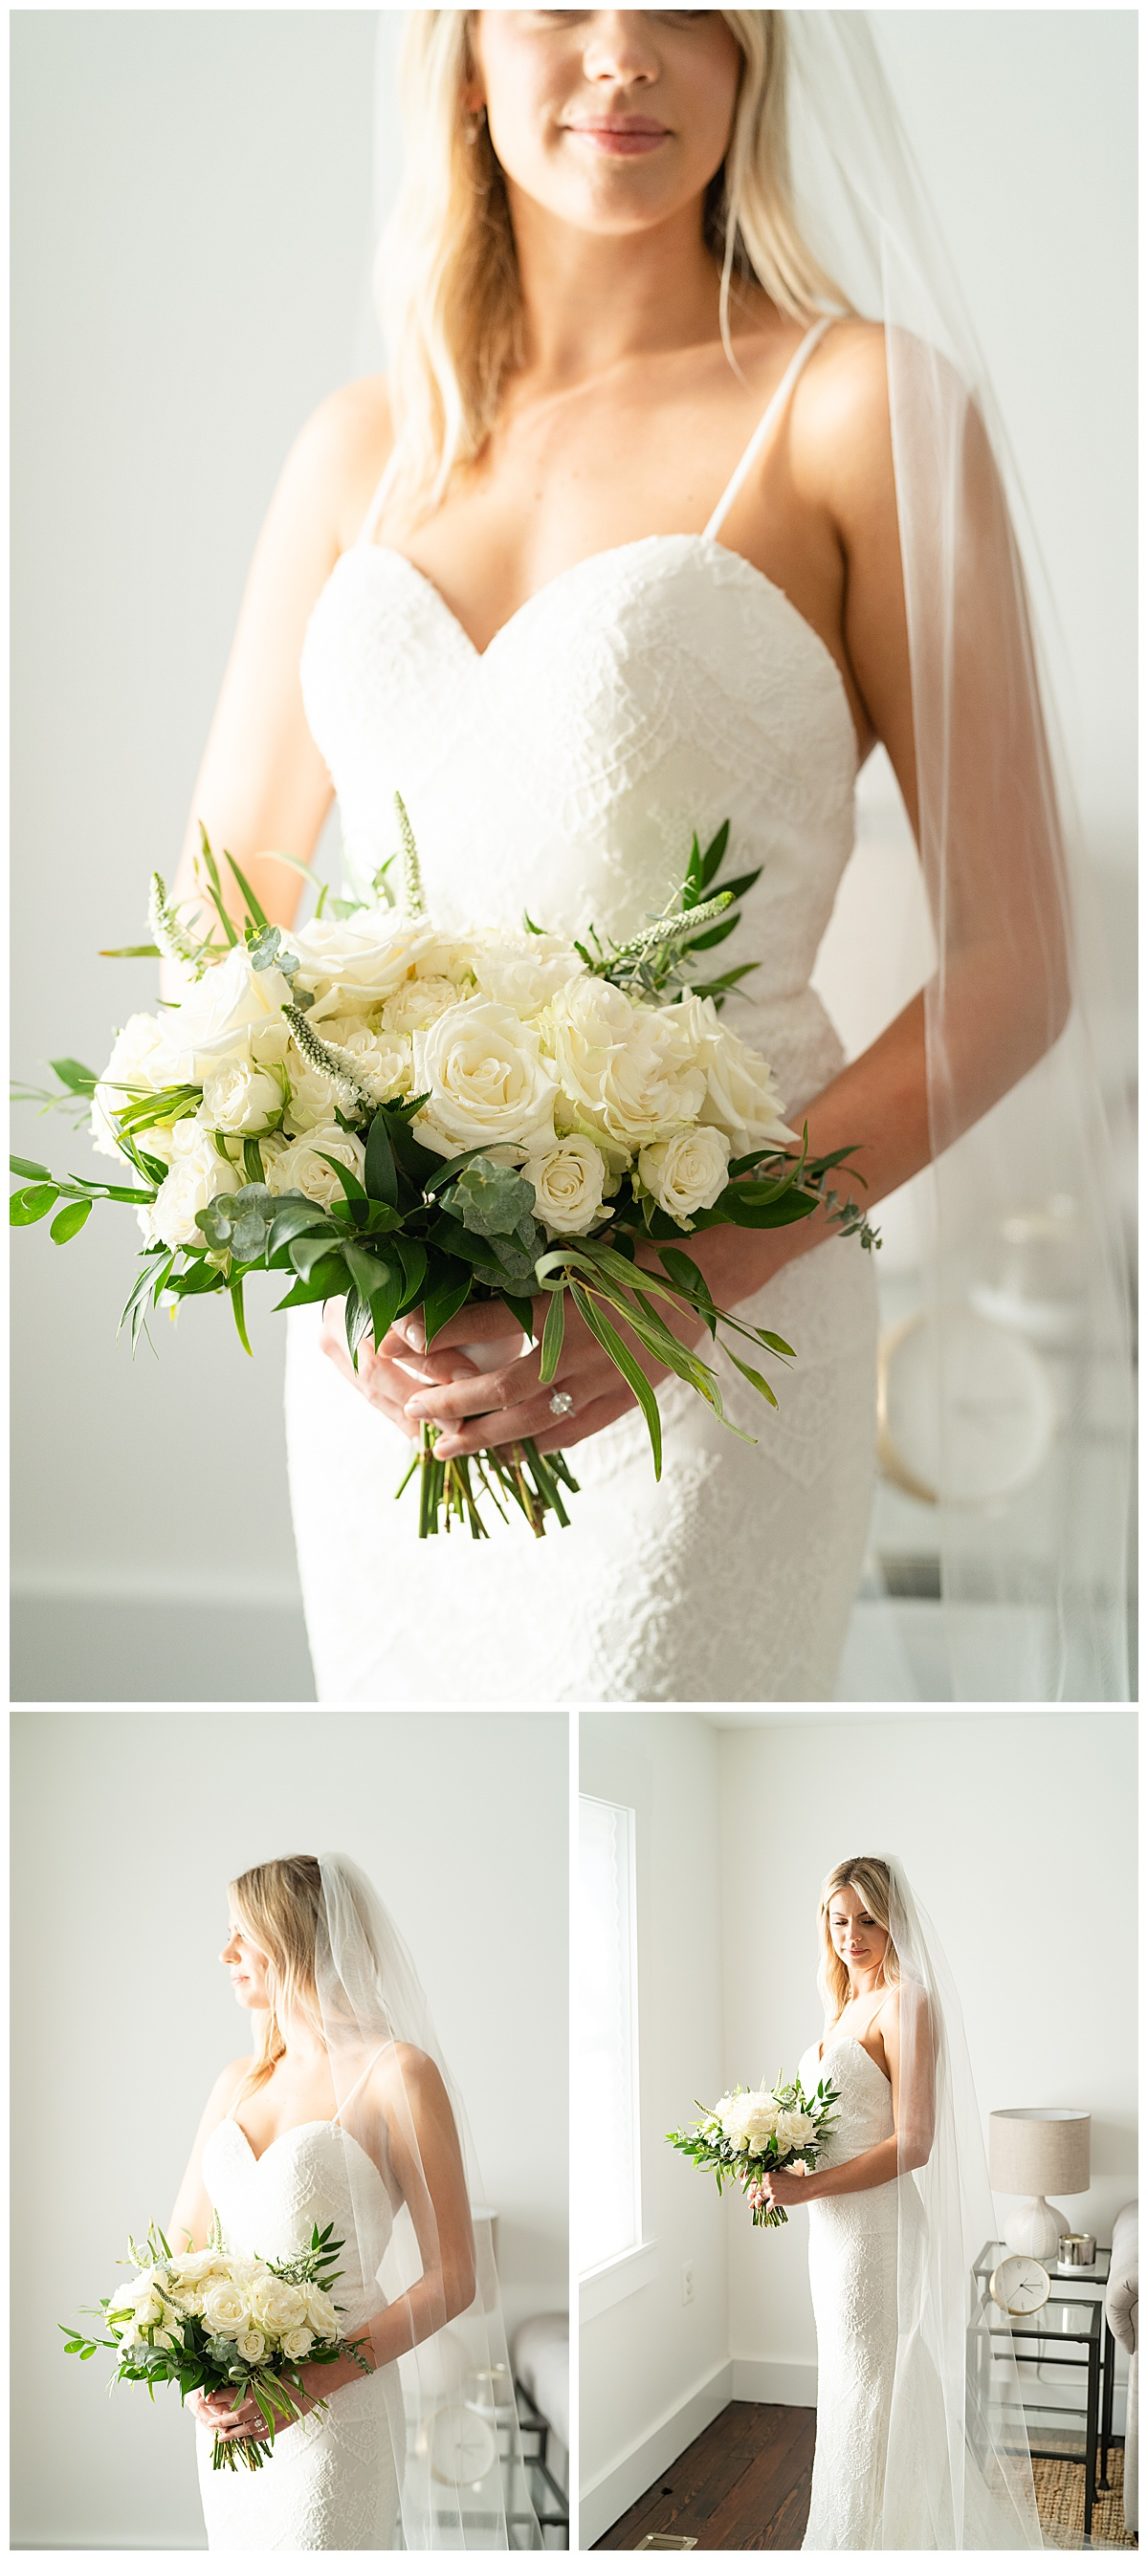 Stefanie Kamerman Photography - Tori and Jason - A White and Green 48 Fields Wedding - Leesburg, VA_0011.jpg